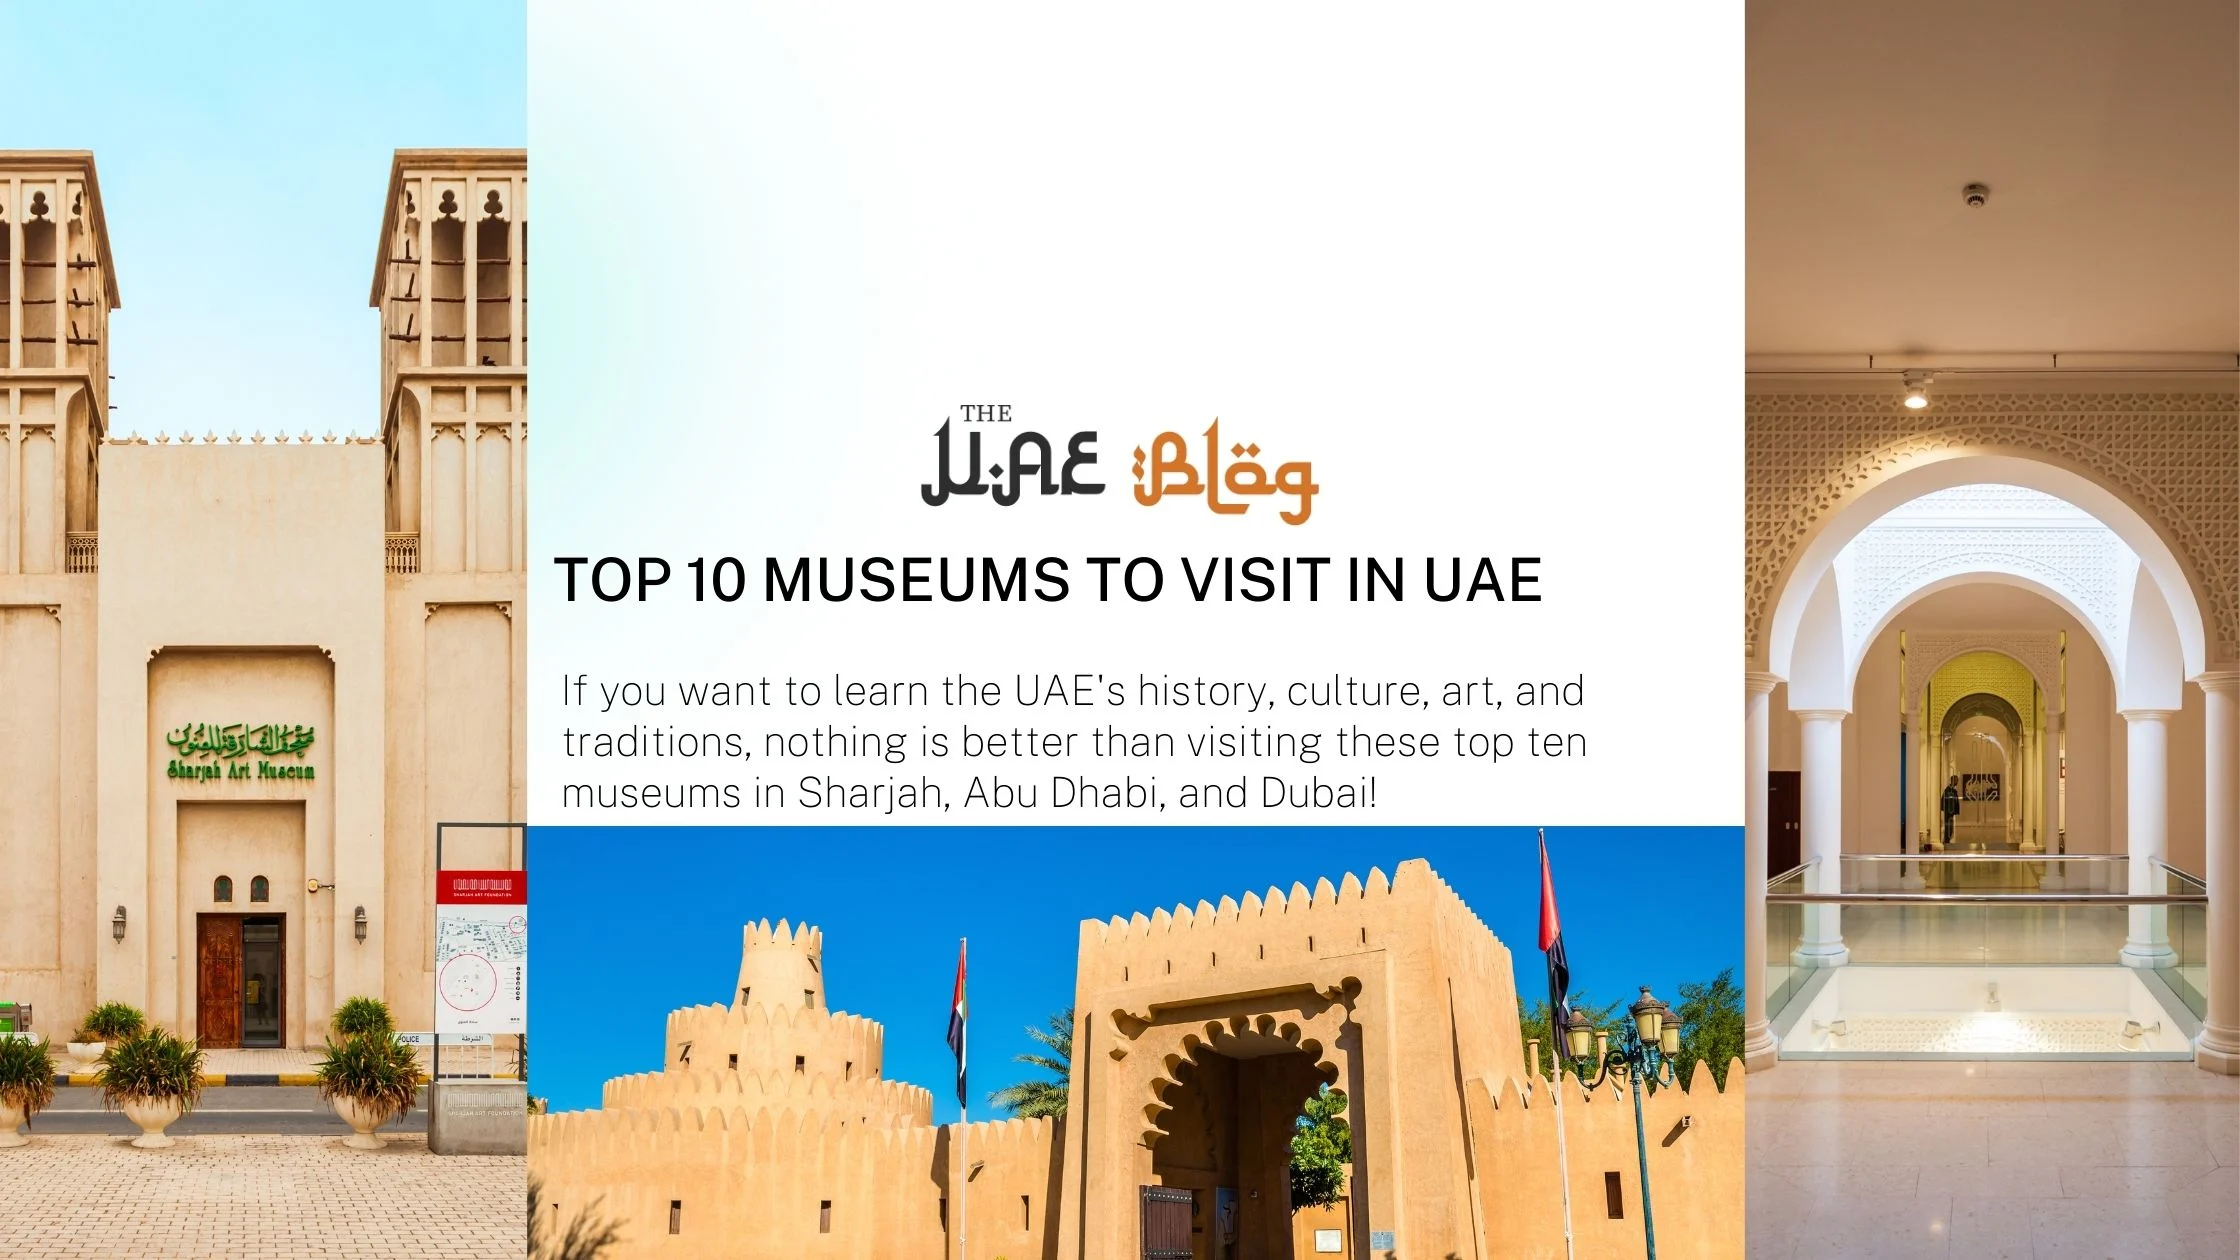 Top 10 Museums to visit in UAE